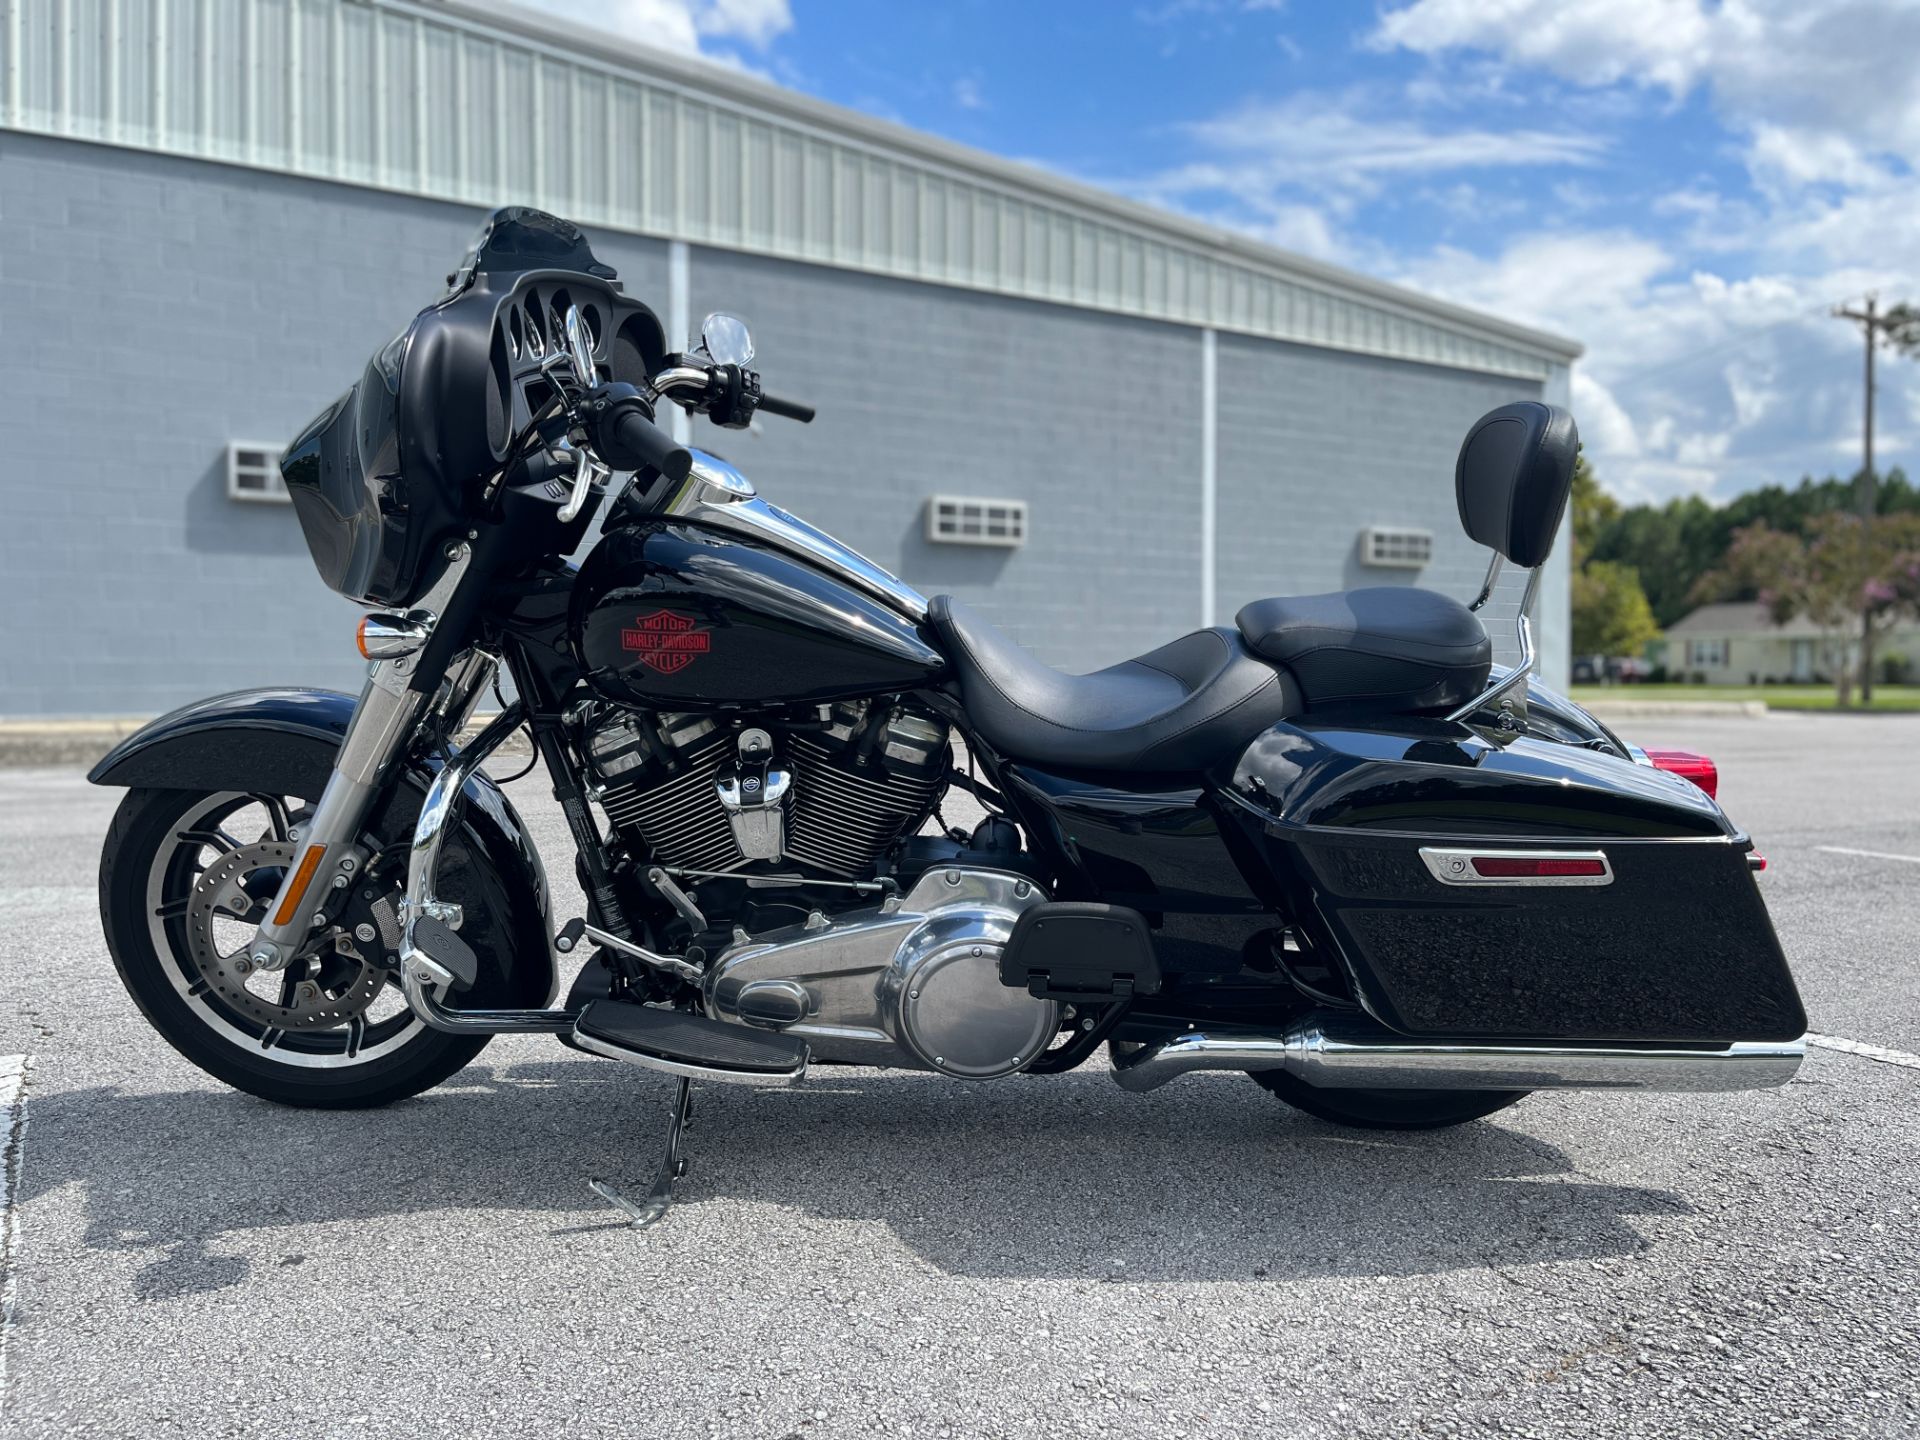 2021 Harley-Davidson Electra Glide® Standard in Jacksonville, North Carolina - Photo 1